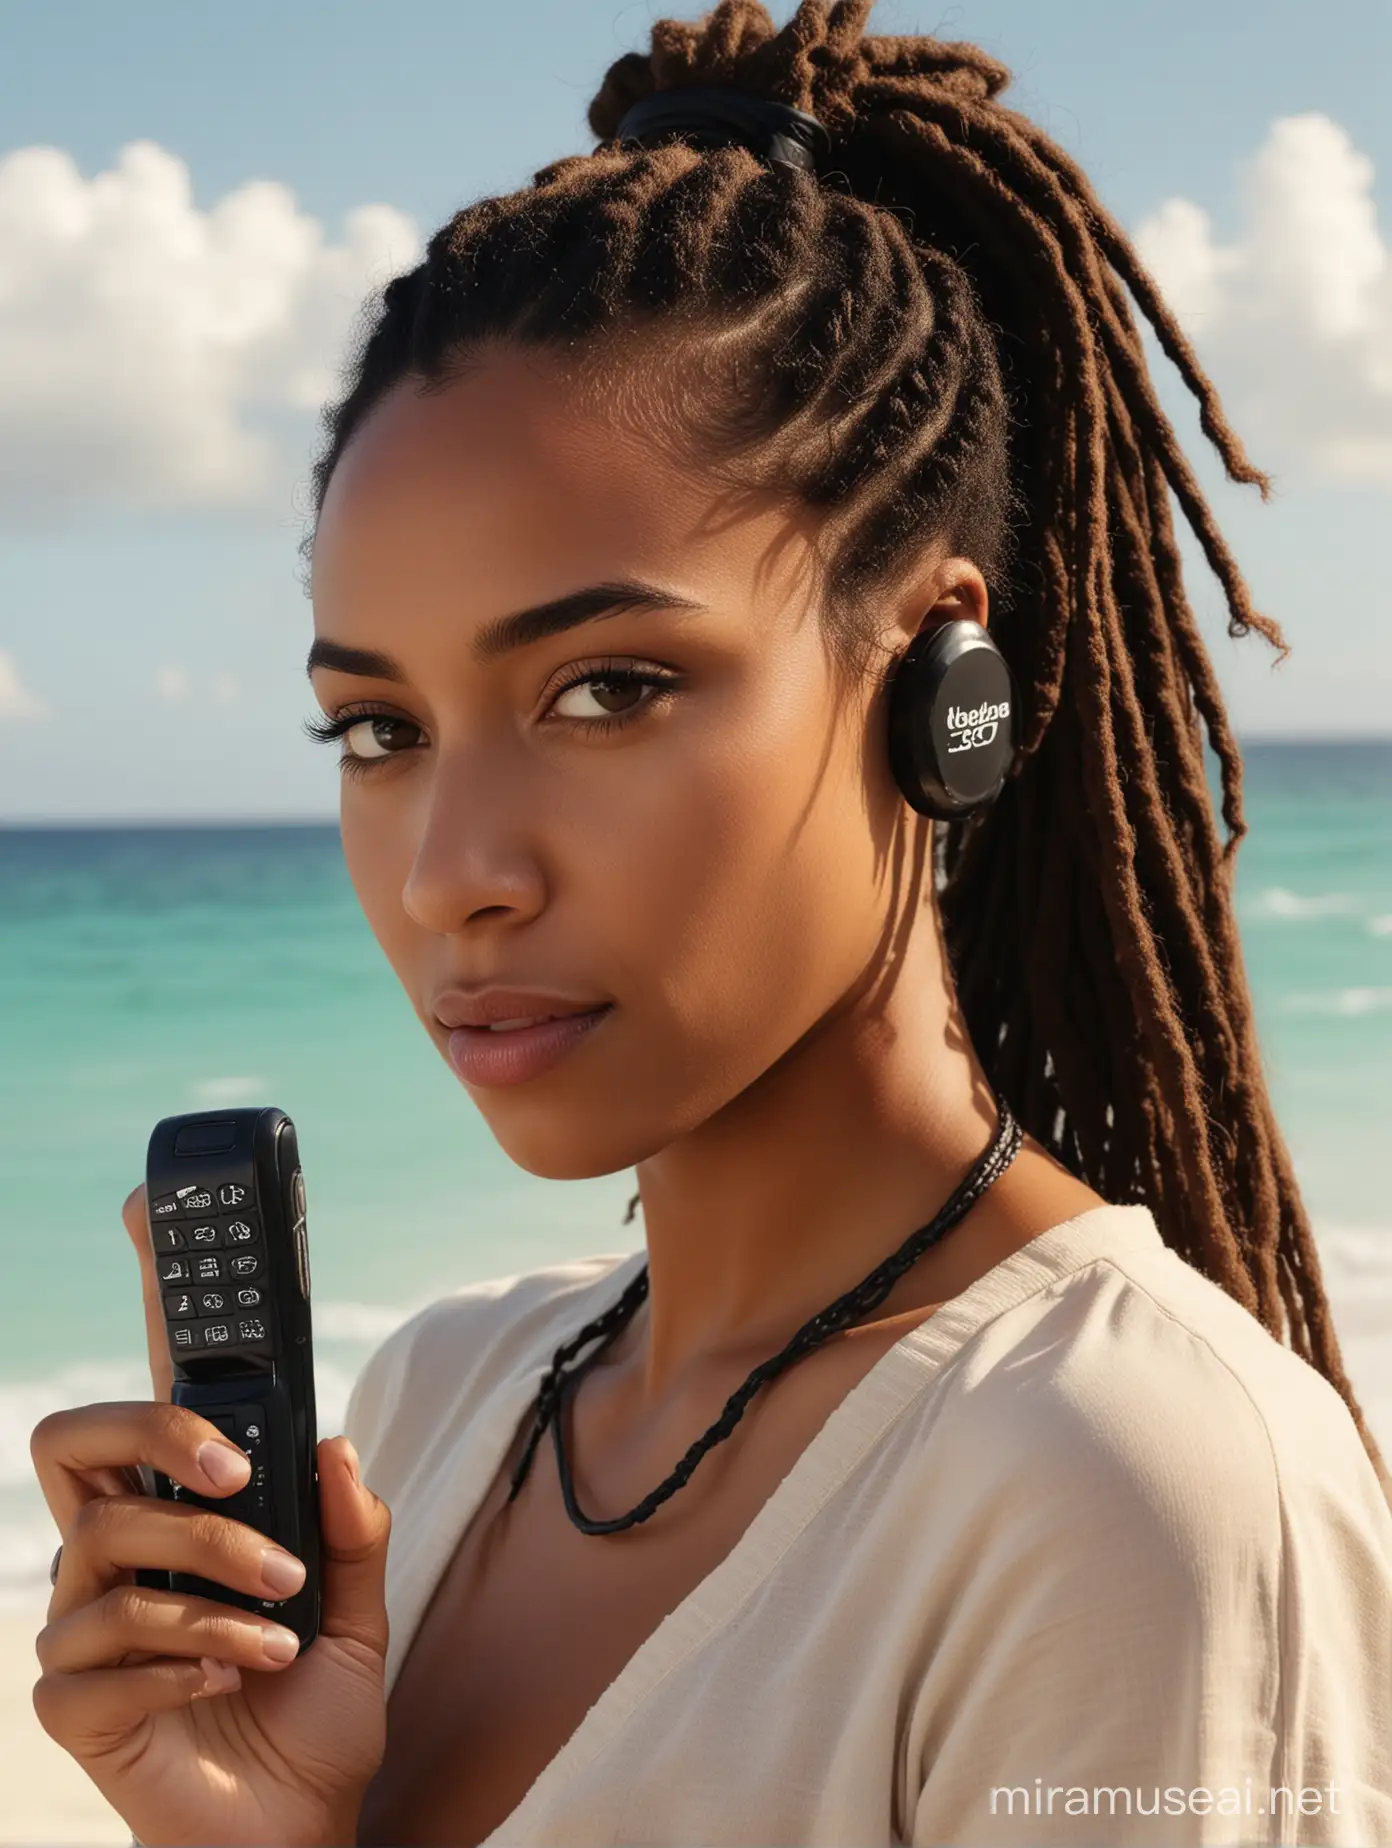 Stylish Caribbean Woman with Ponytail Dreadlocks Using Vintage 3G Phone on Caribbean Shoreline